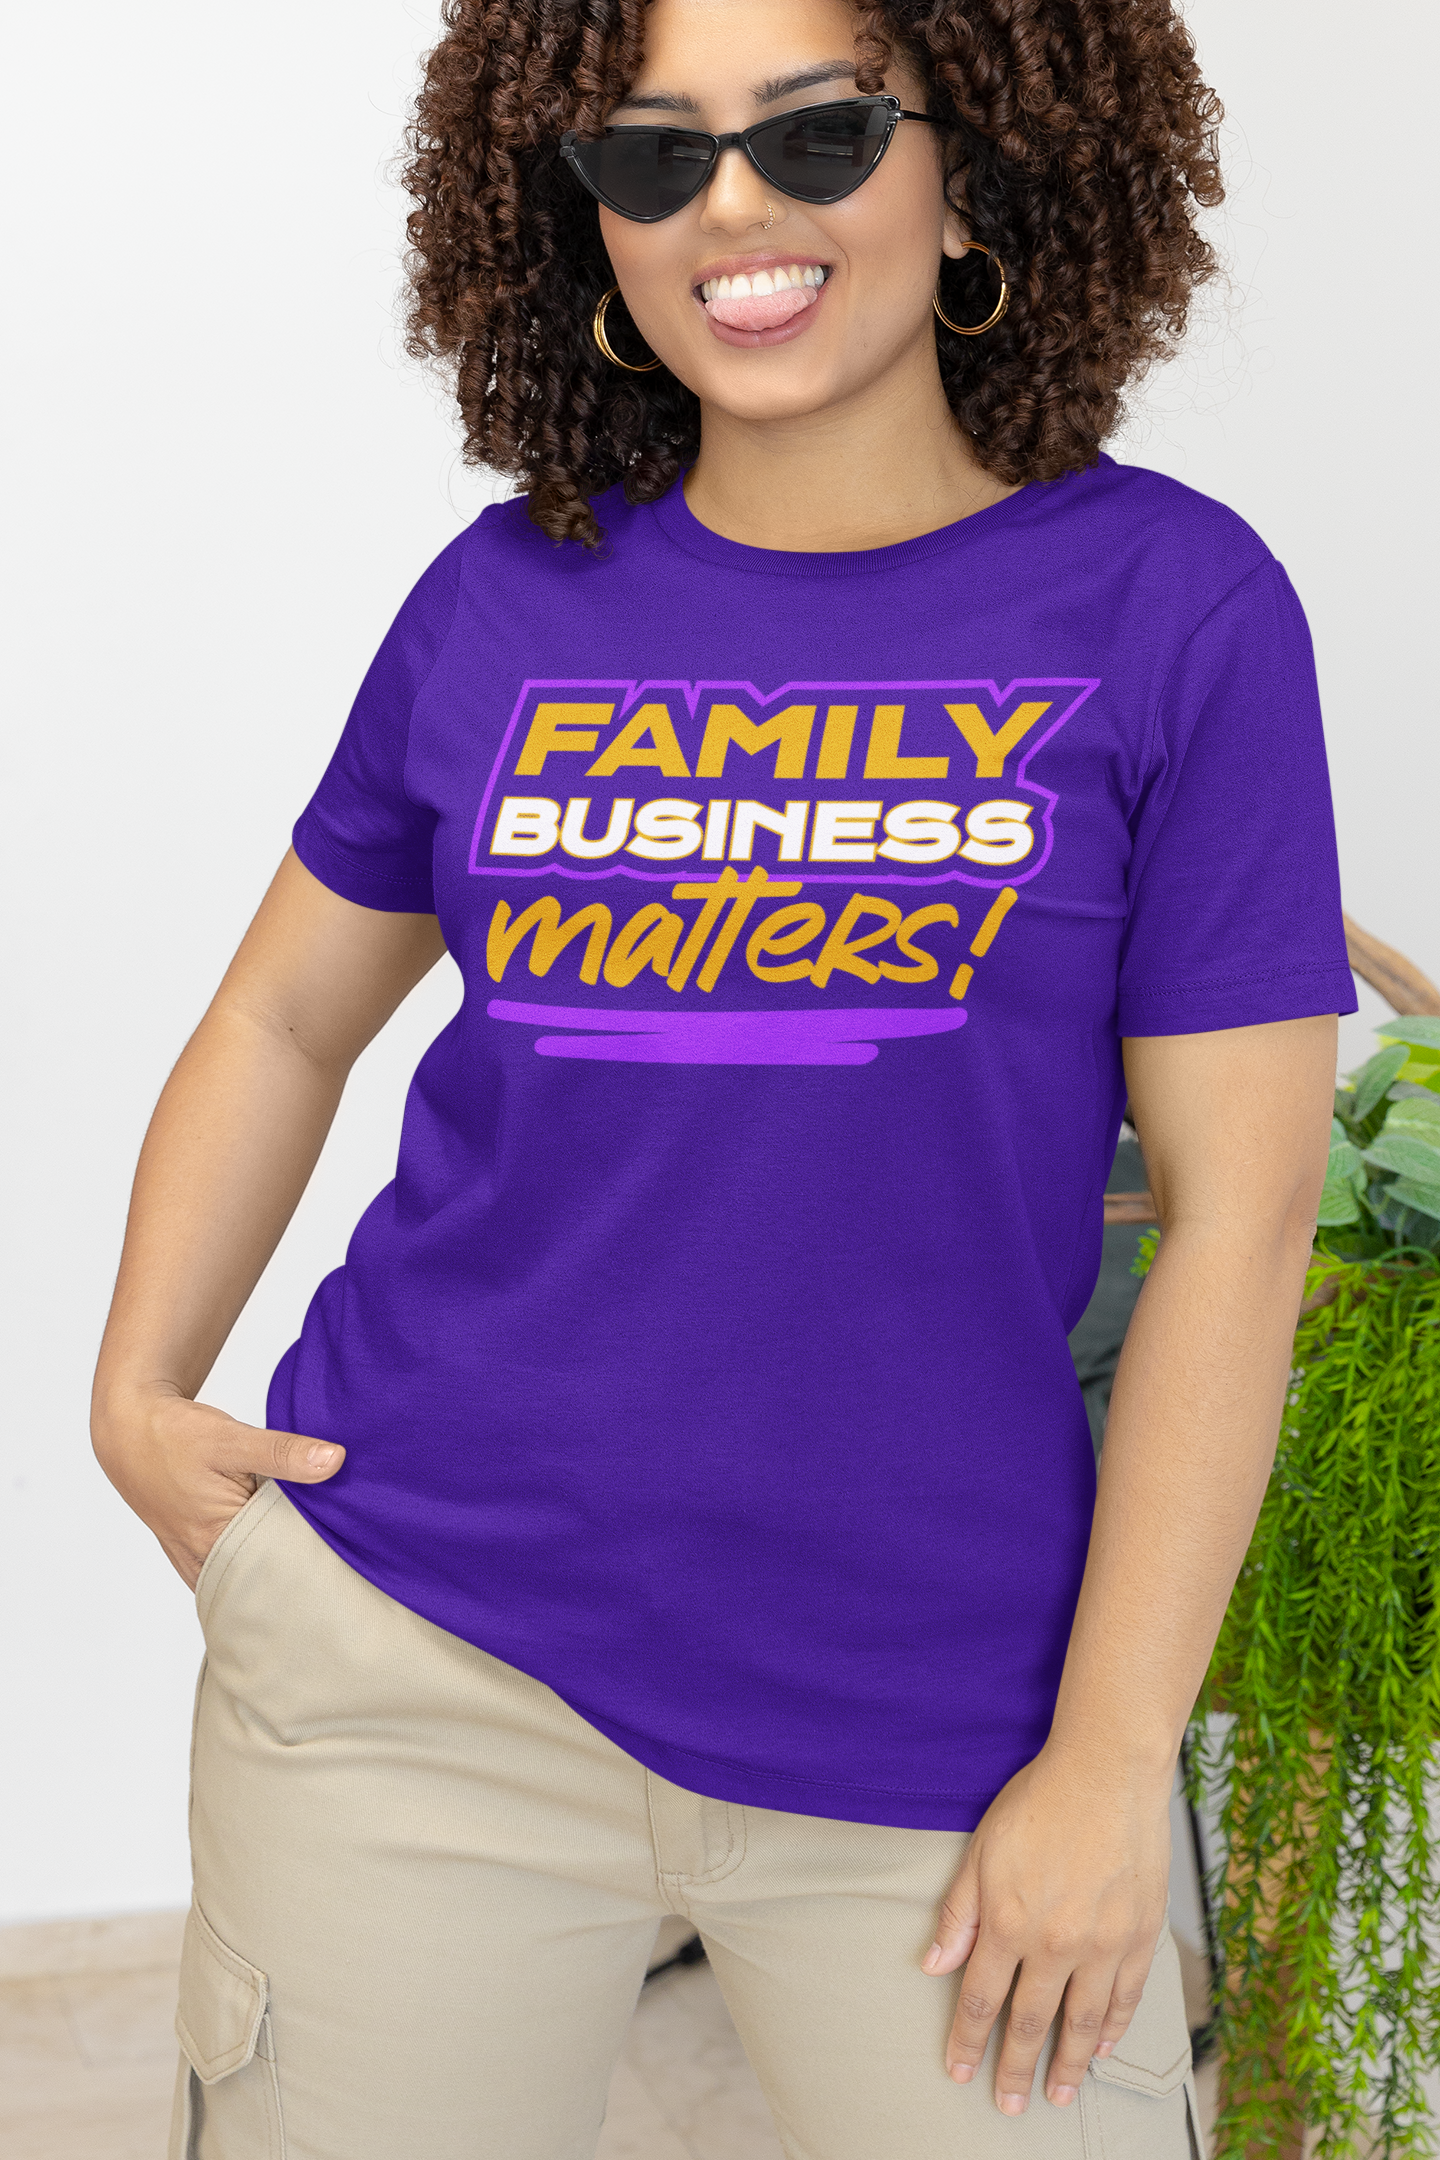 Family Business Matters T-Shirt